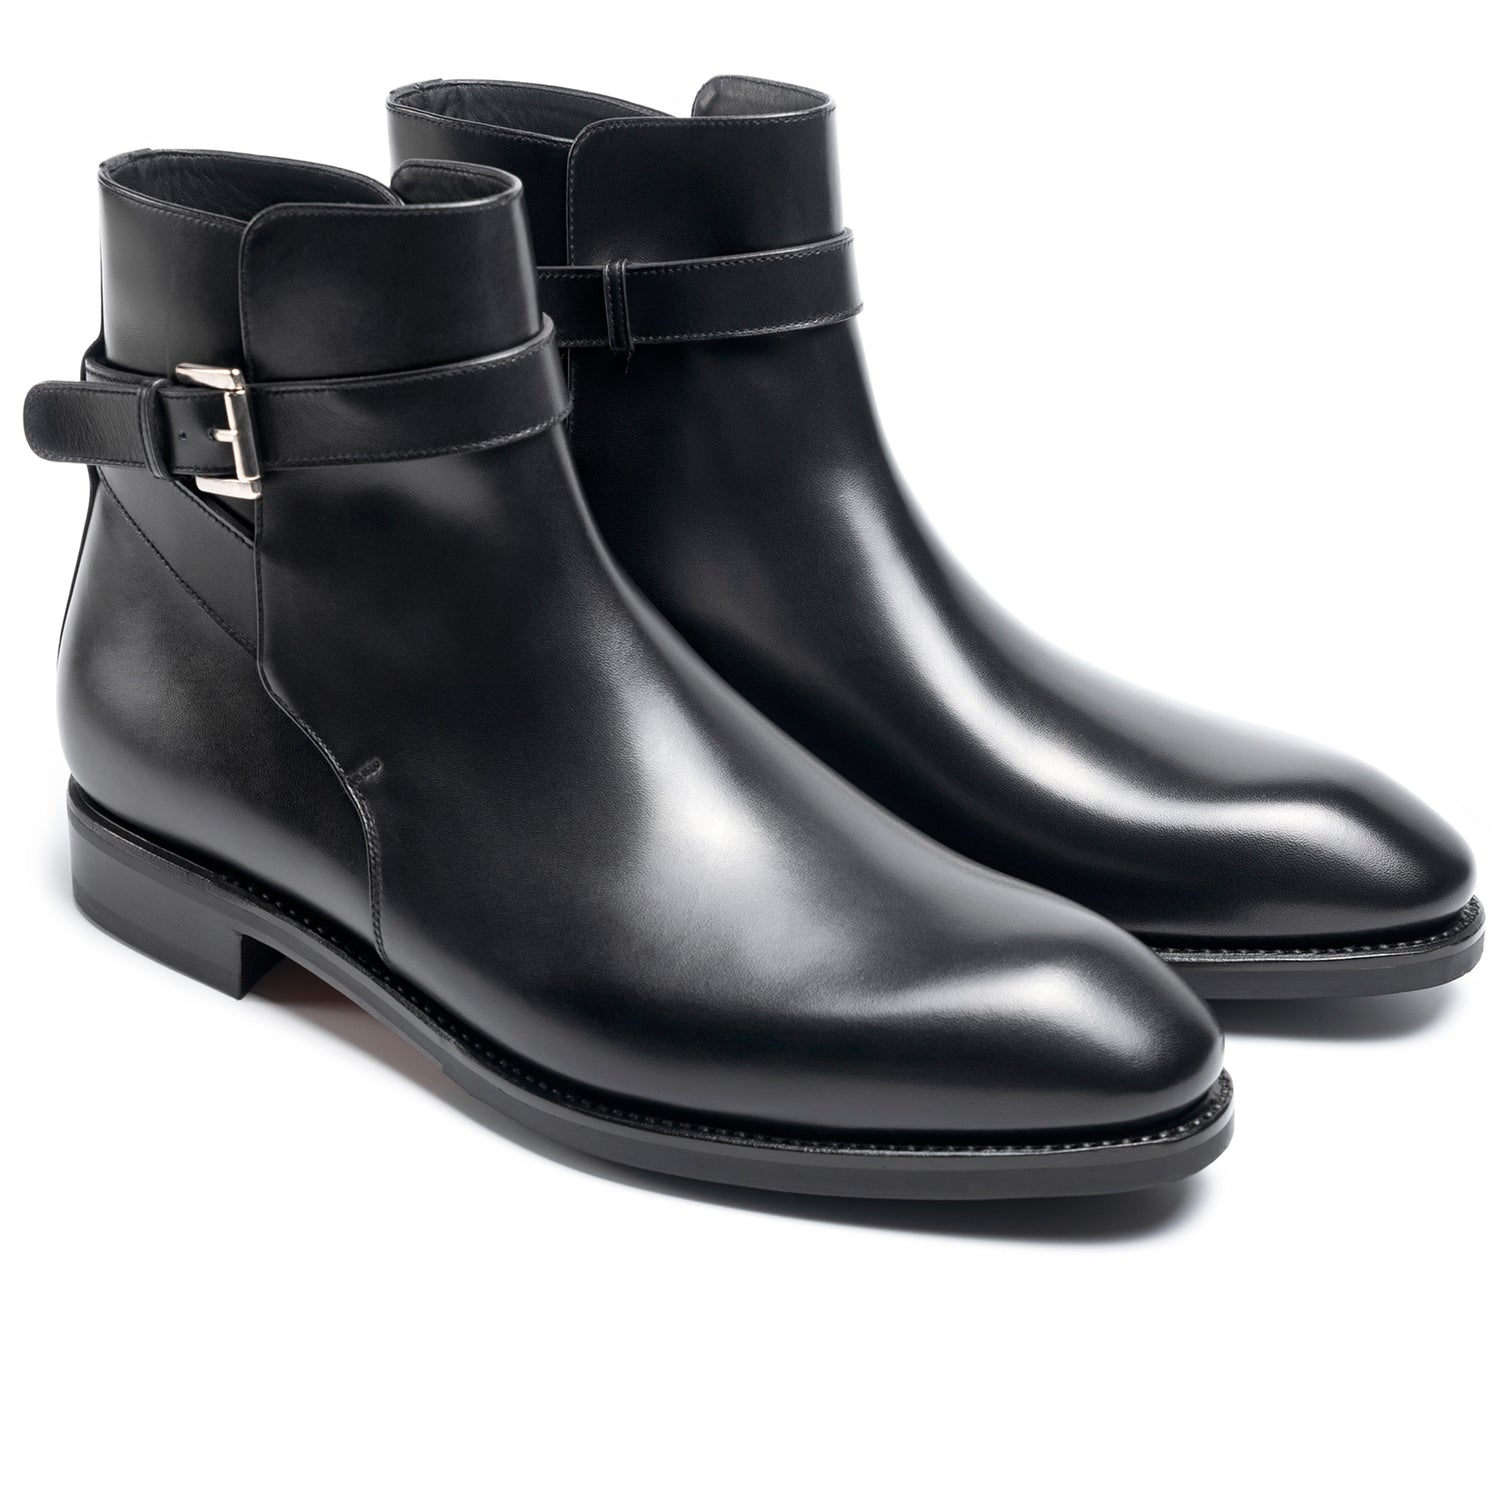 TLB Mallorca leather shoes 513 / ALAN / BOXCALF BLACK